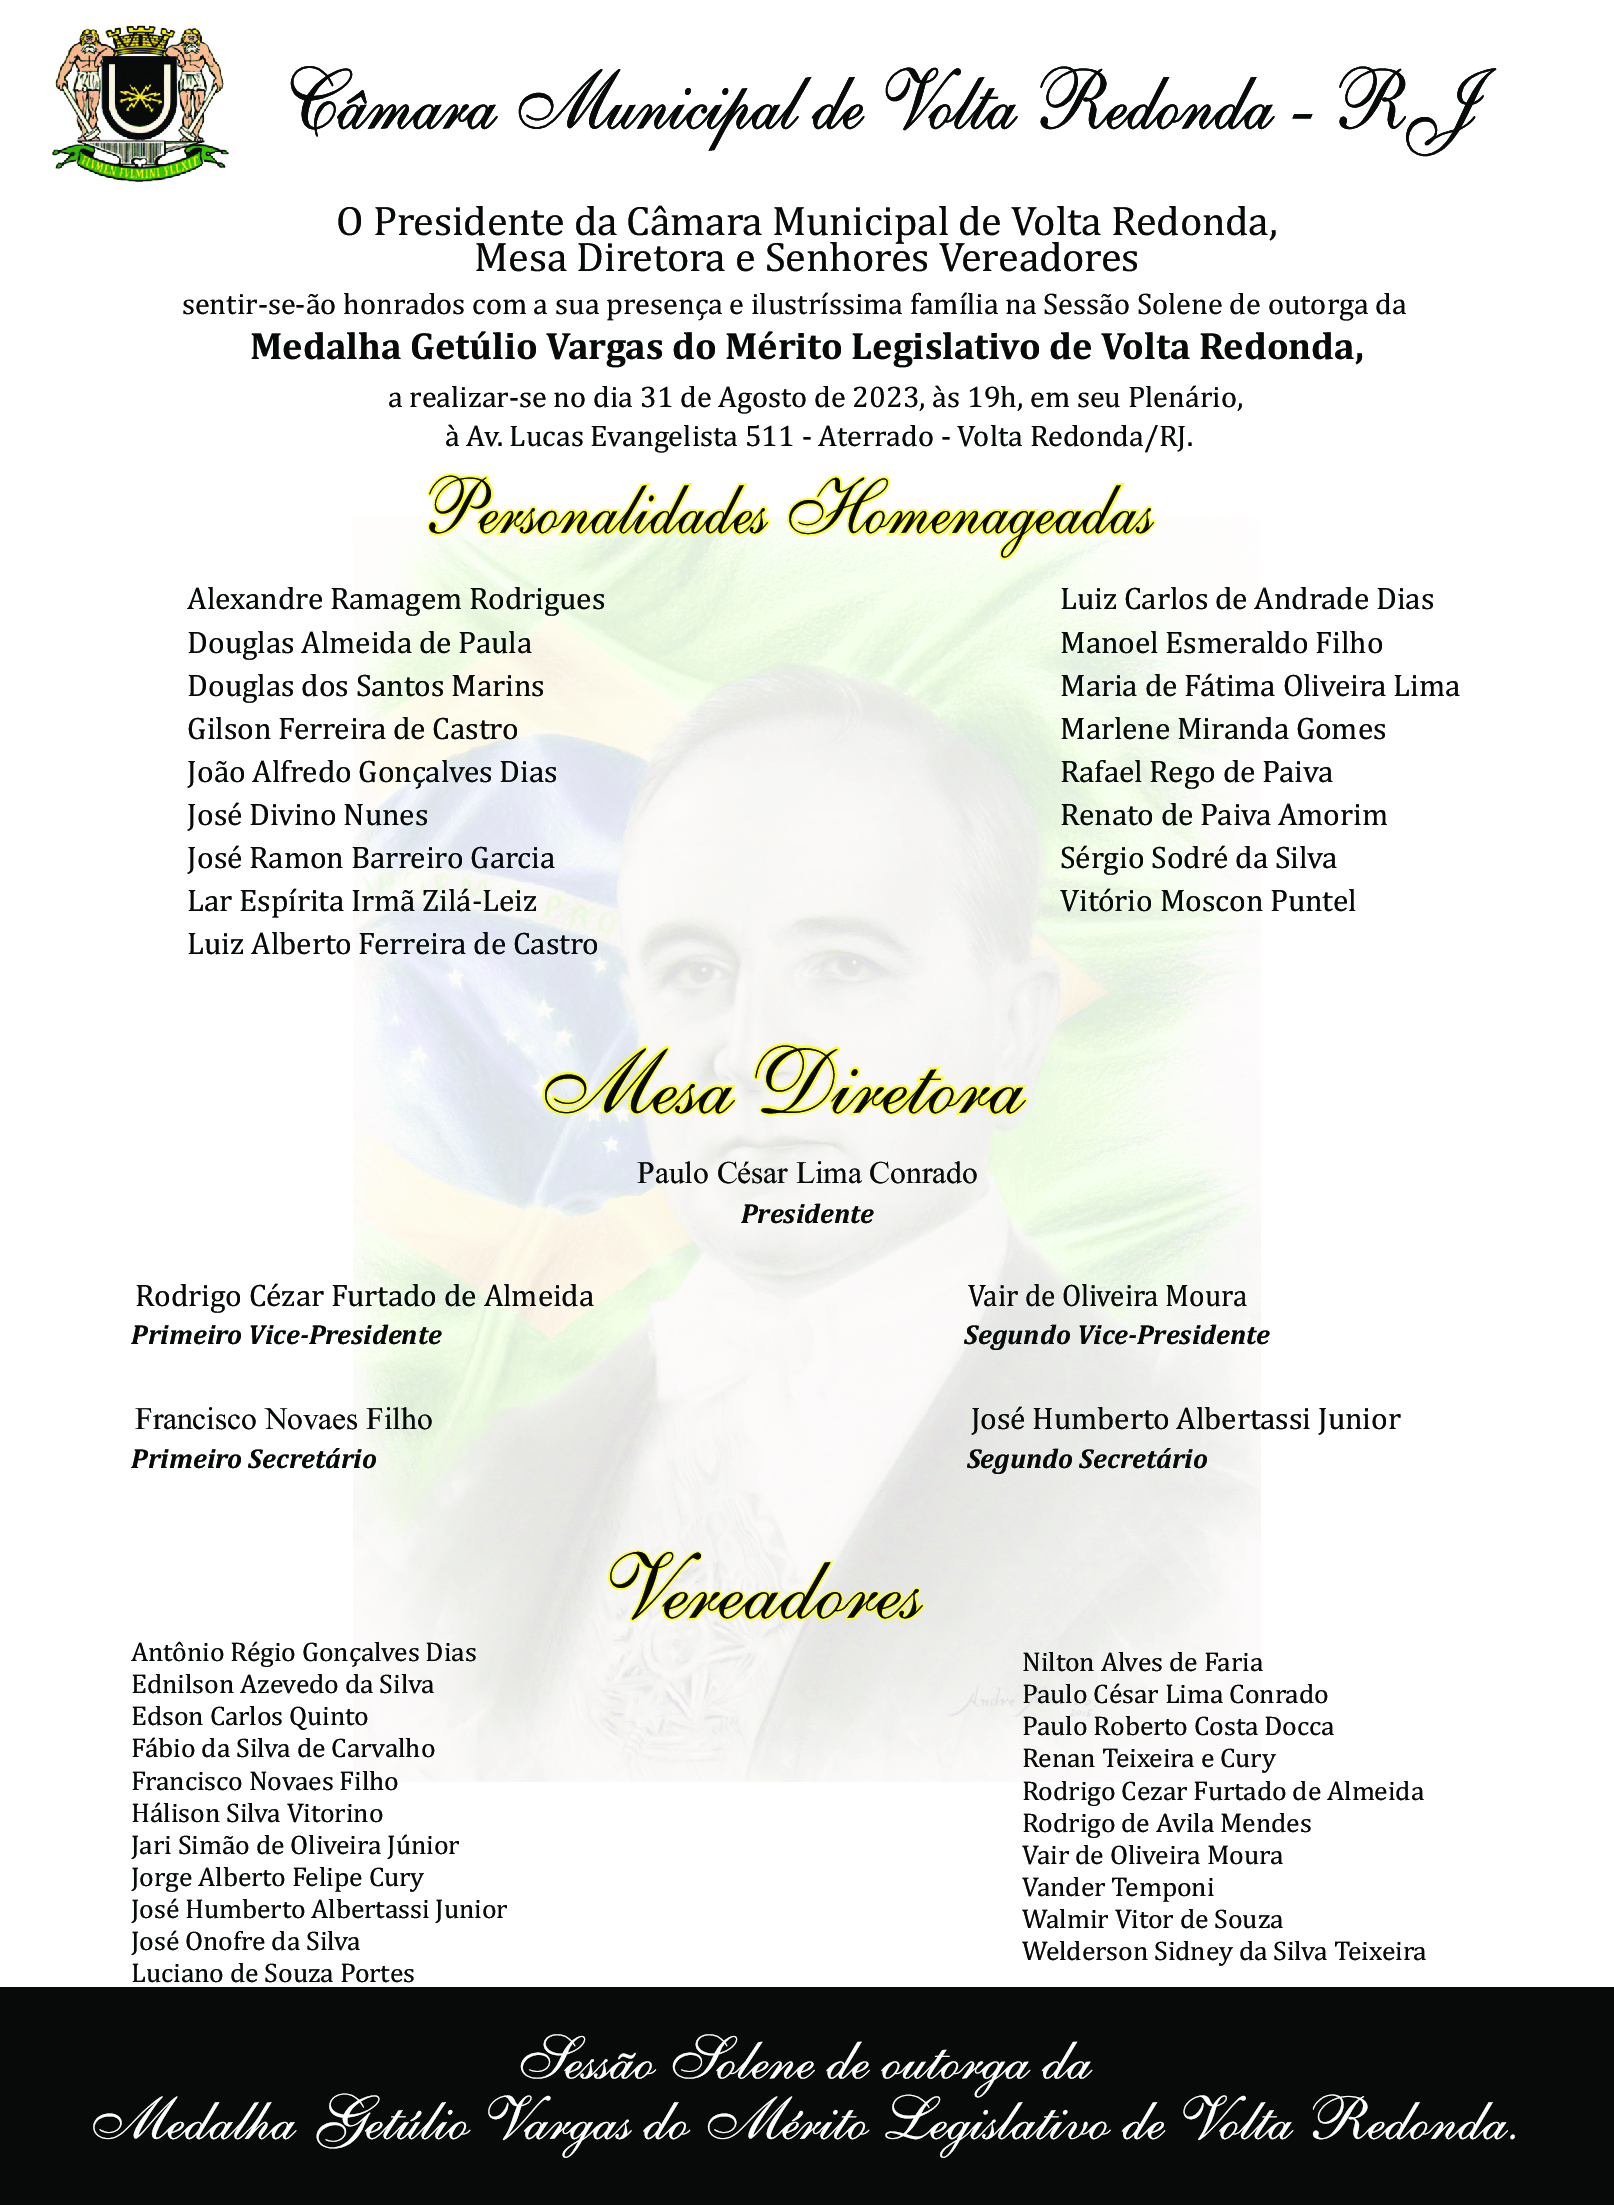 Convite - Sessão Solene - Medalha Getúlio Vargas - Homenageados